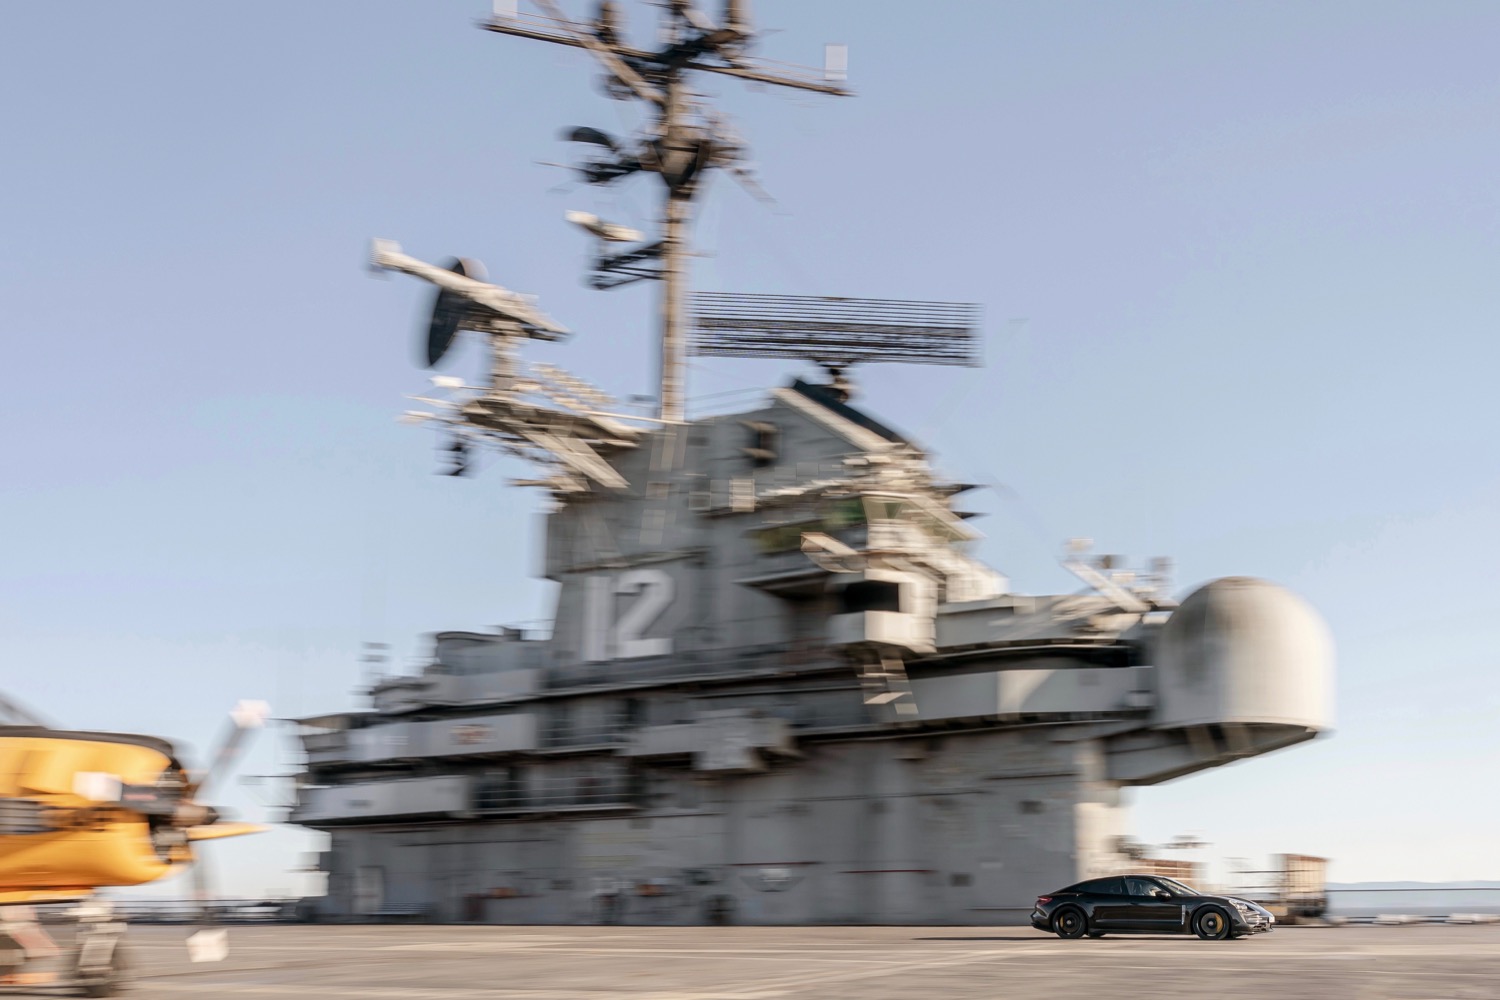 porsche taycan electric car acceleration test on aircraft carrier deck prototype